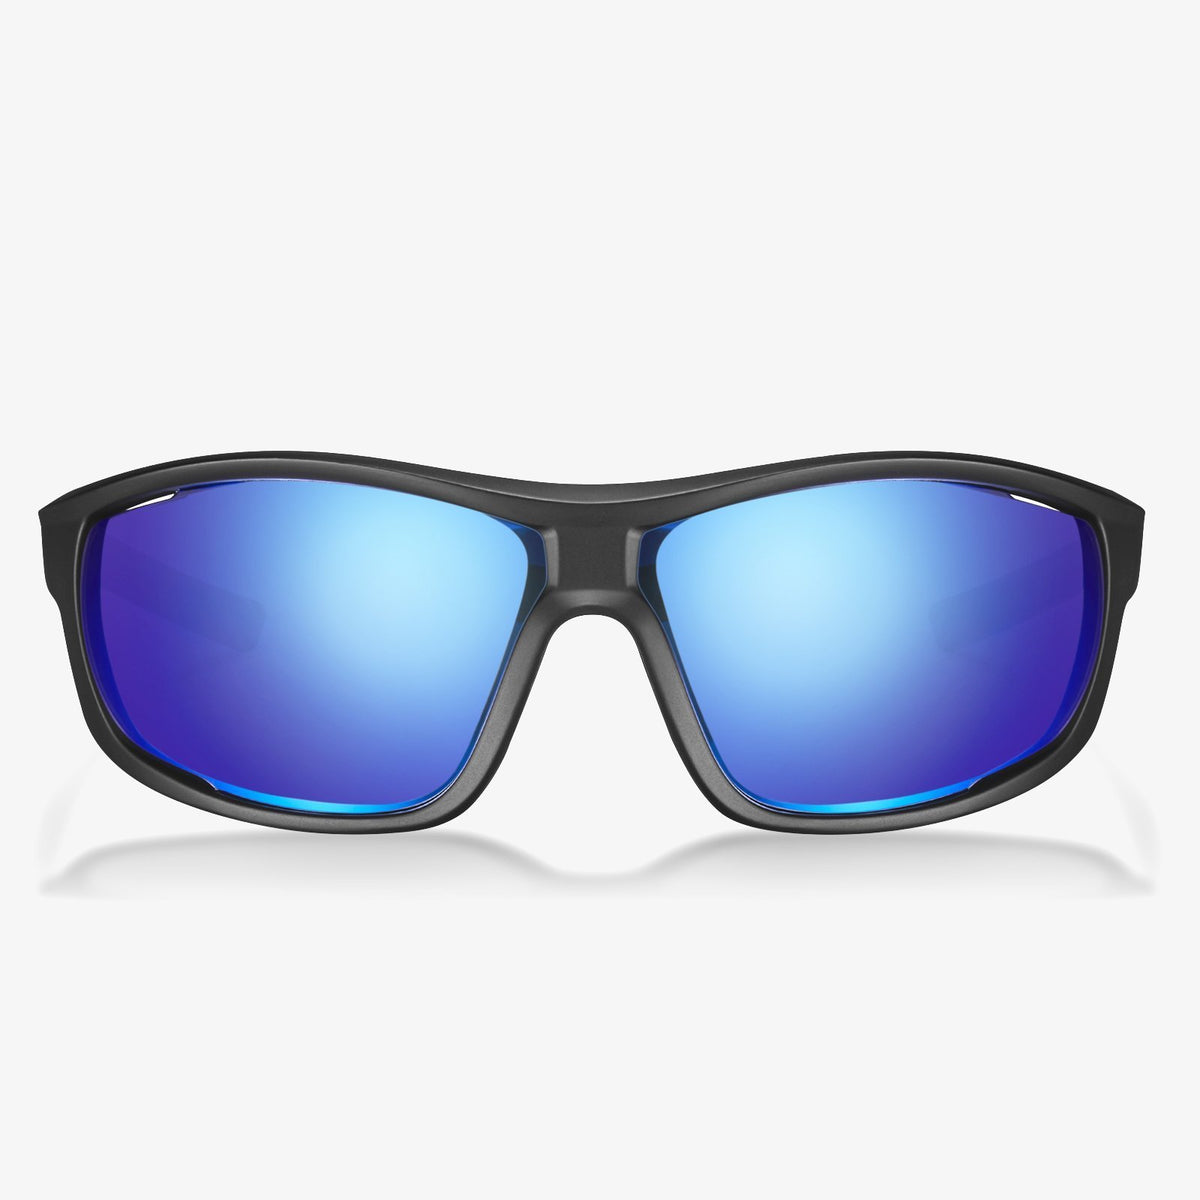 Category 4 super dark Sports Sunglasses-Cat 4 lens – Locs Sunglasses